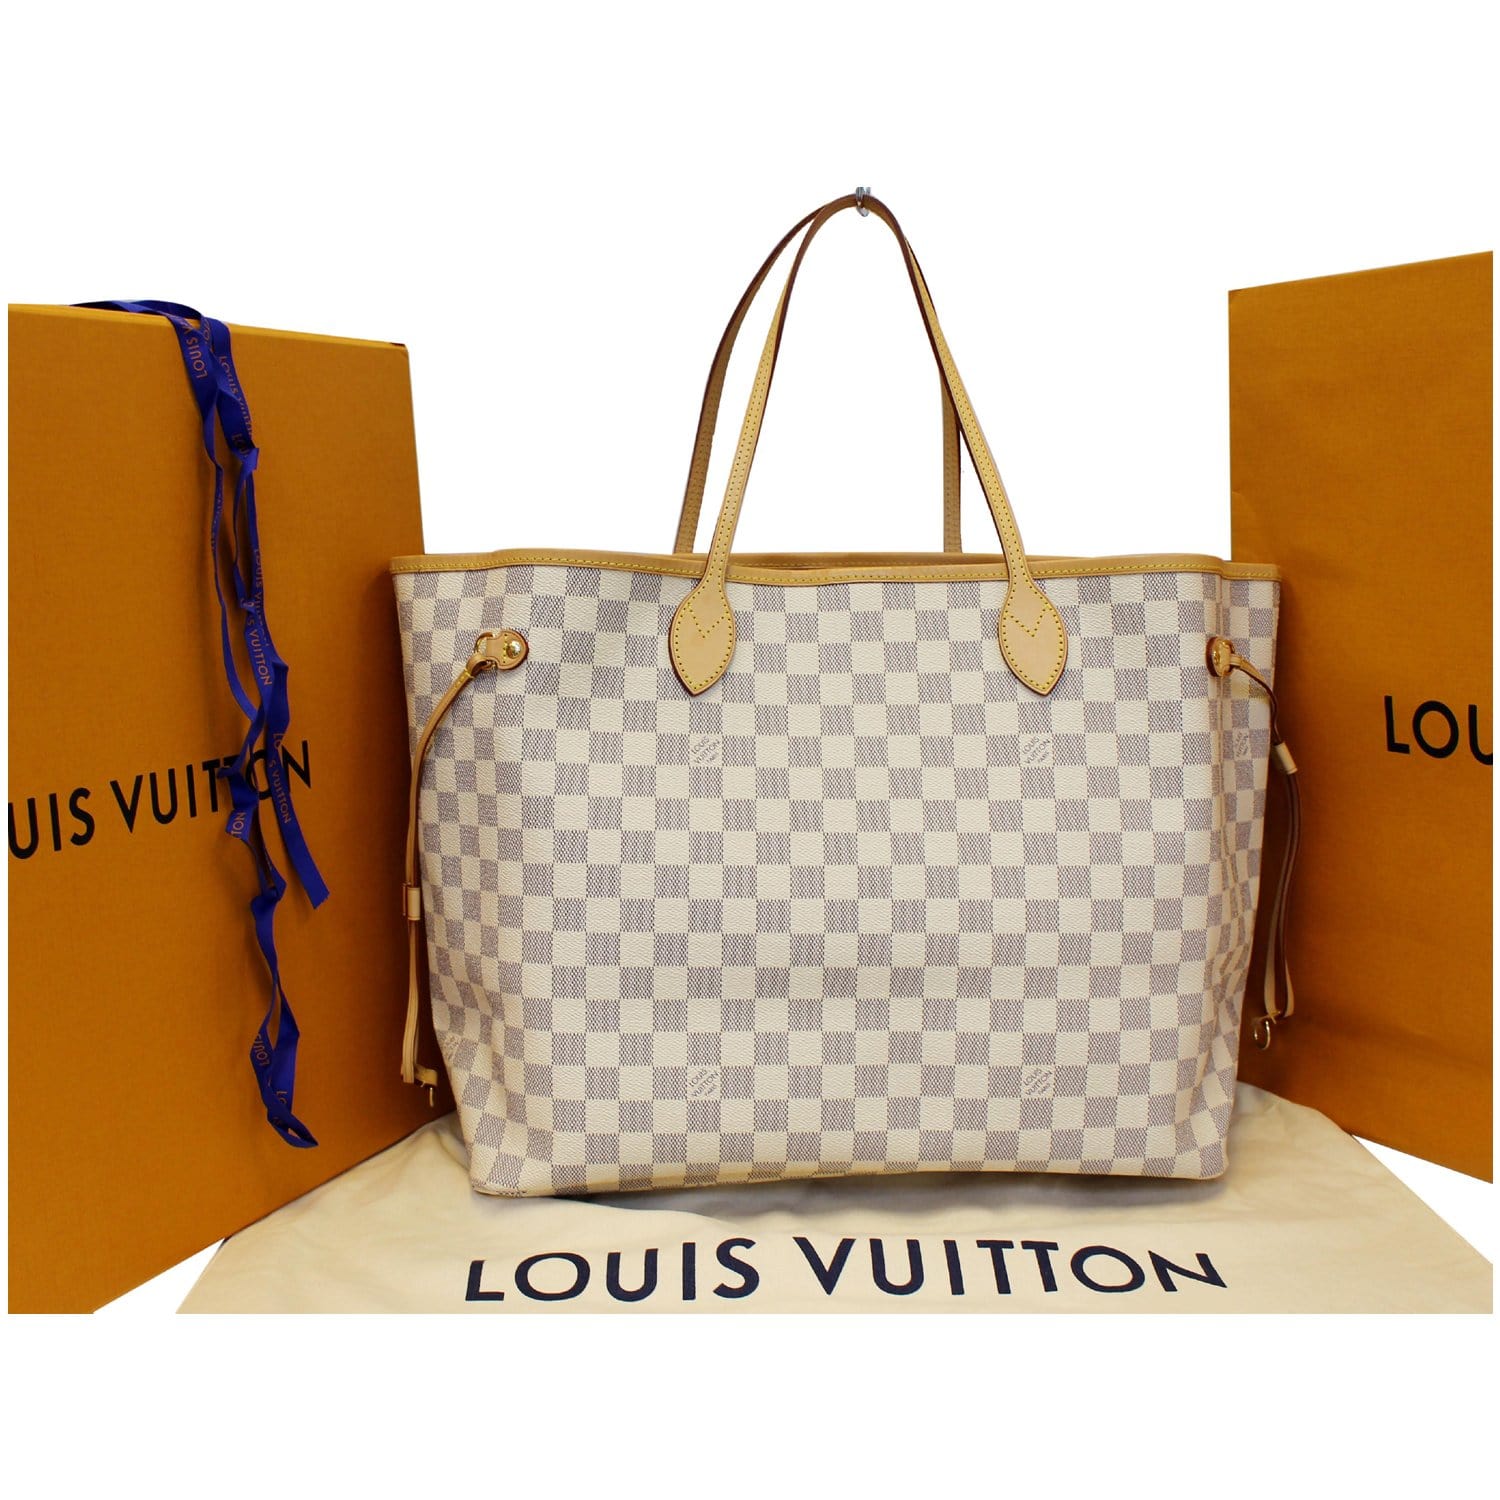 2018 Louis Vuitton Damier Azur Neverfull MM Tote Bag Rose